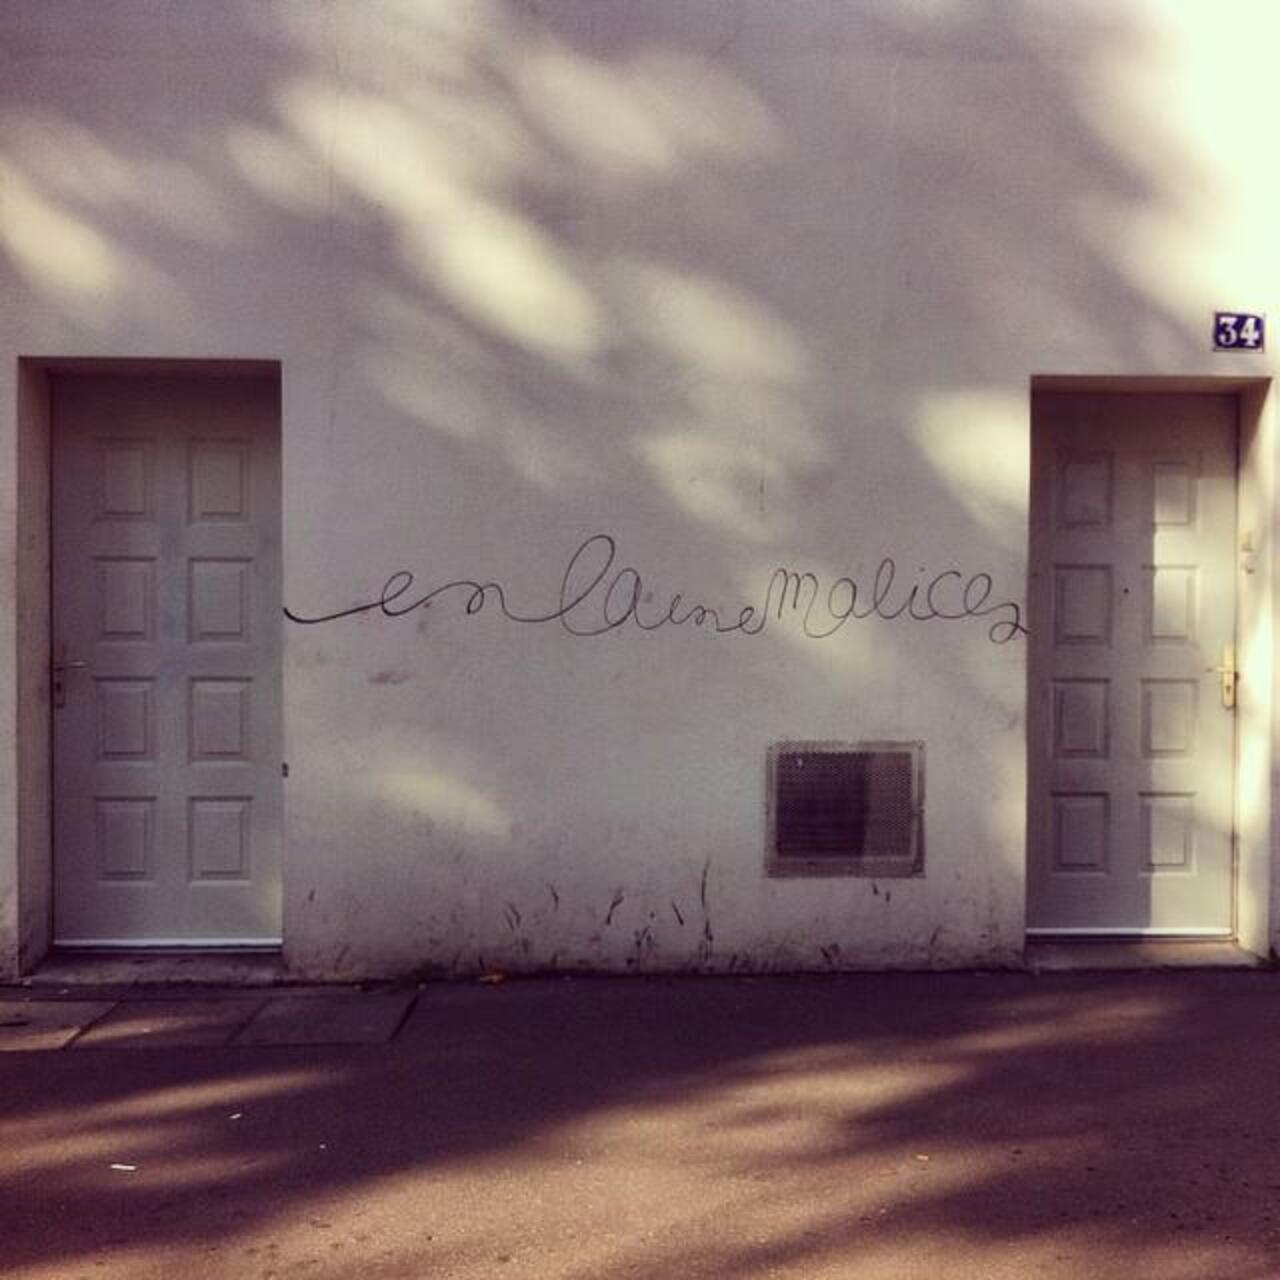 #Paris #graffiti photo by @benstagramin http://ift.tt/1WVlD0M #StreetArt http://t.co/RMvYrMsqPm